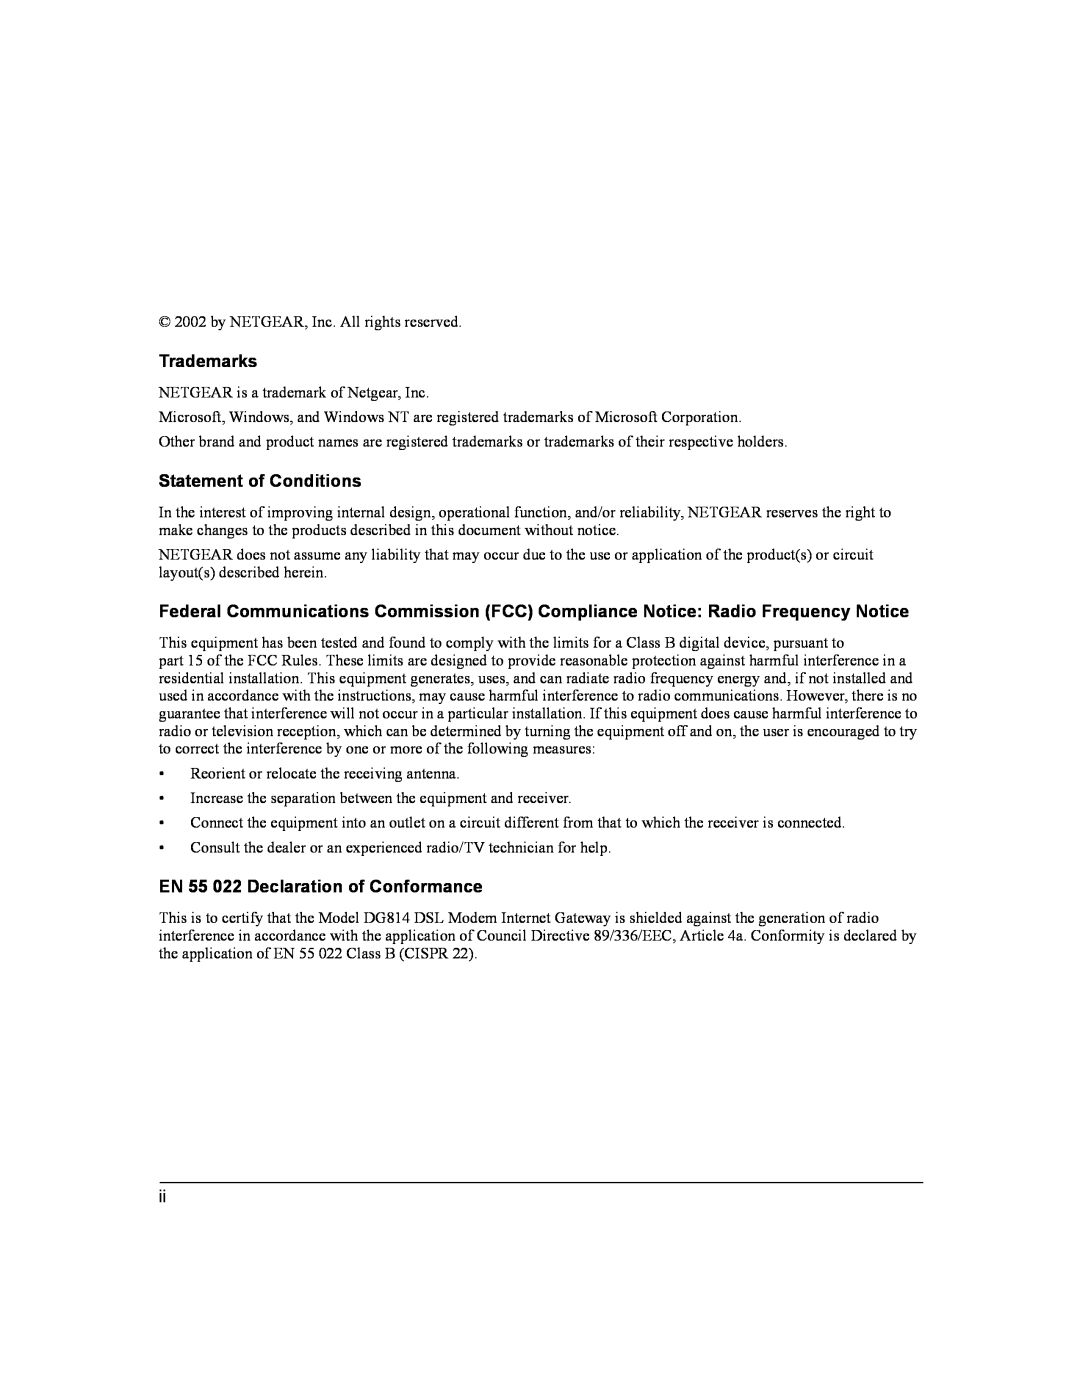 NETGEAR DG814 DSL manual Trademarks, Statement of Conditions, EN 55 022 Declaration of Conformance 